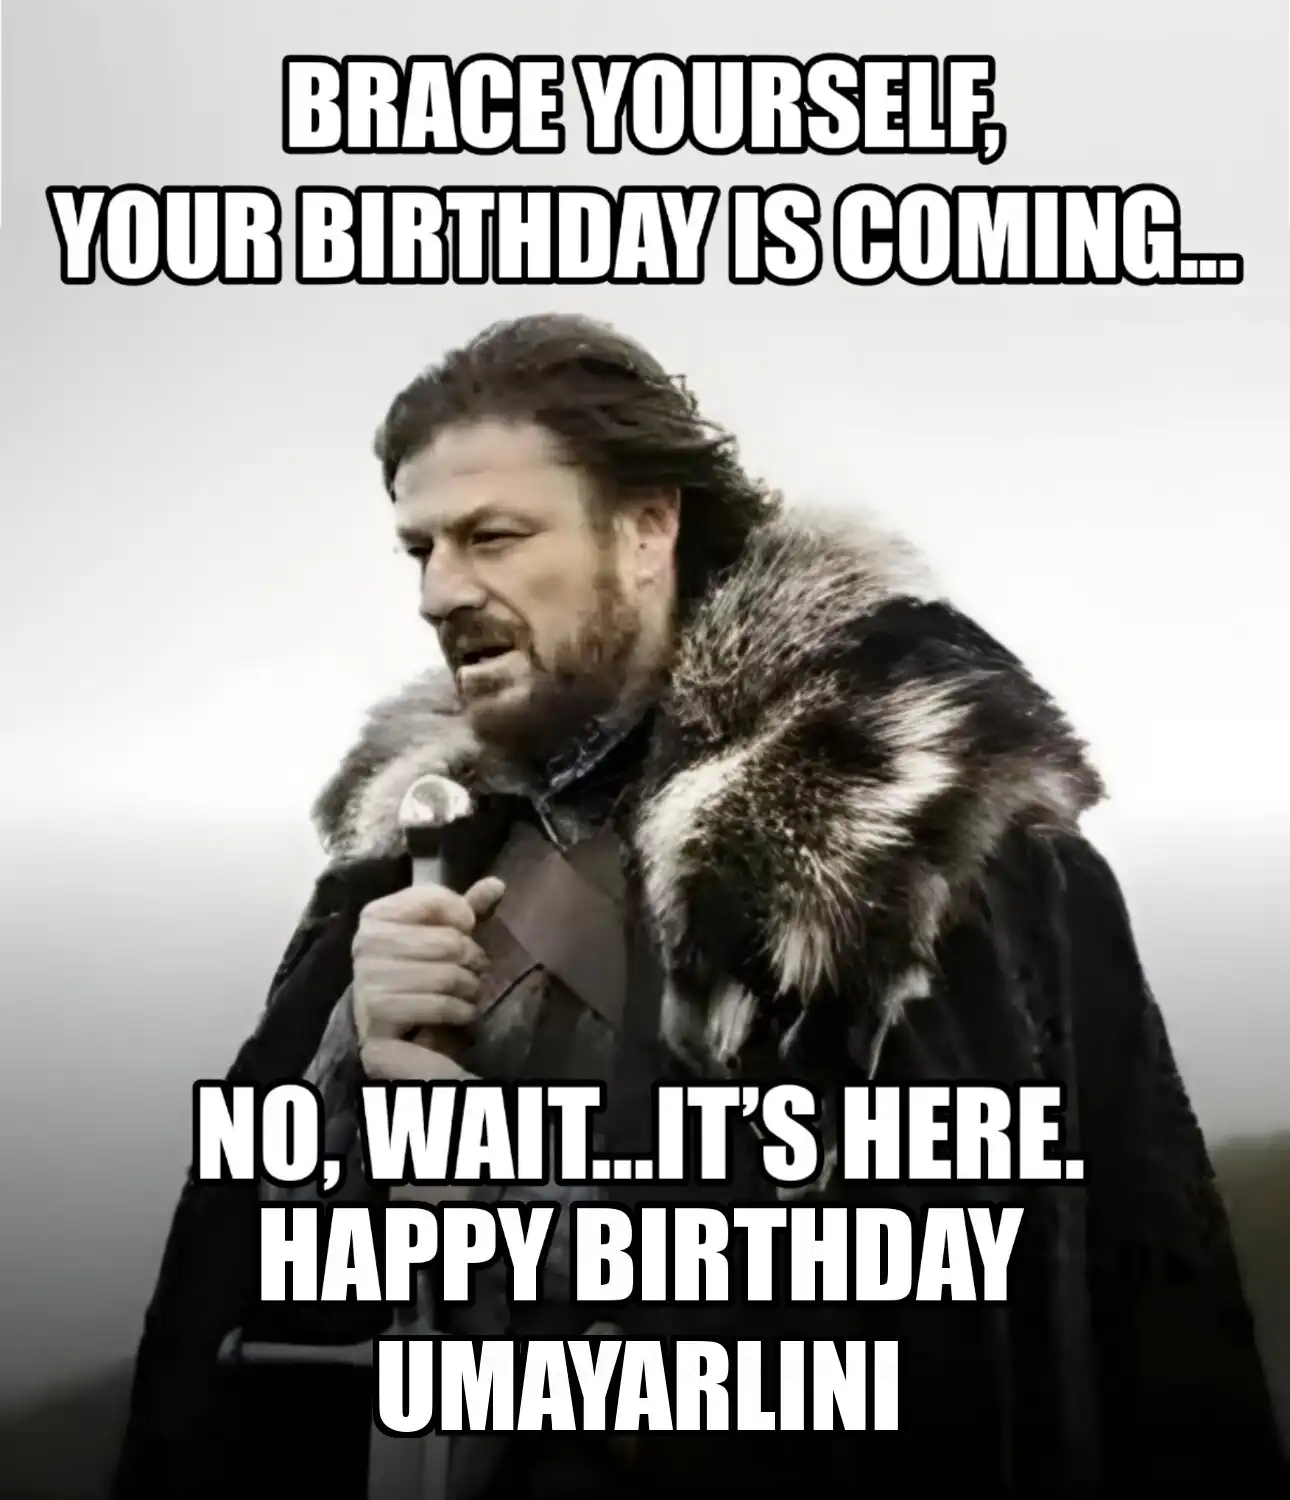 Happy Birthday Umayarlini Brace Yourself Your Birthday Is Coming Meme